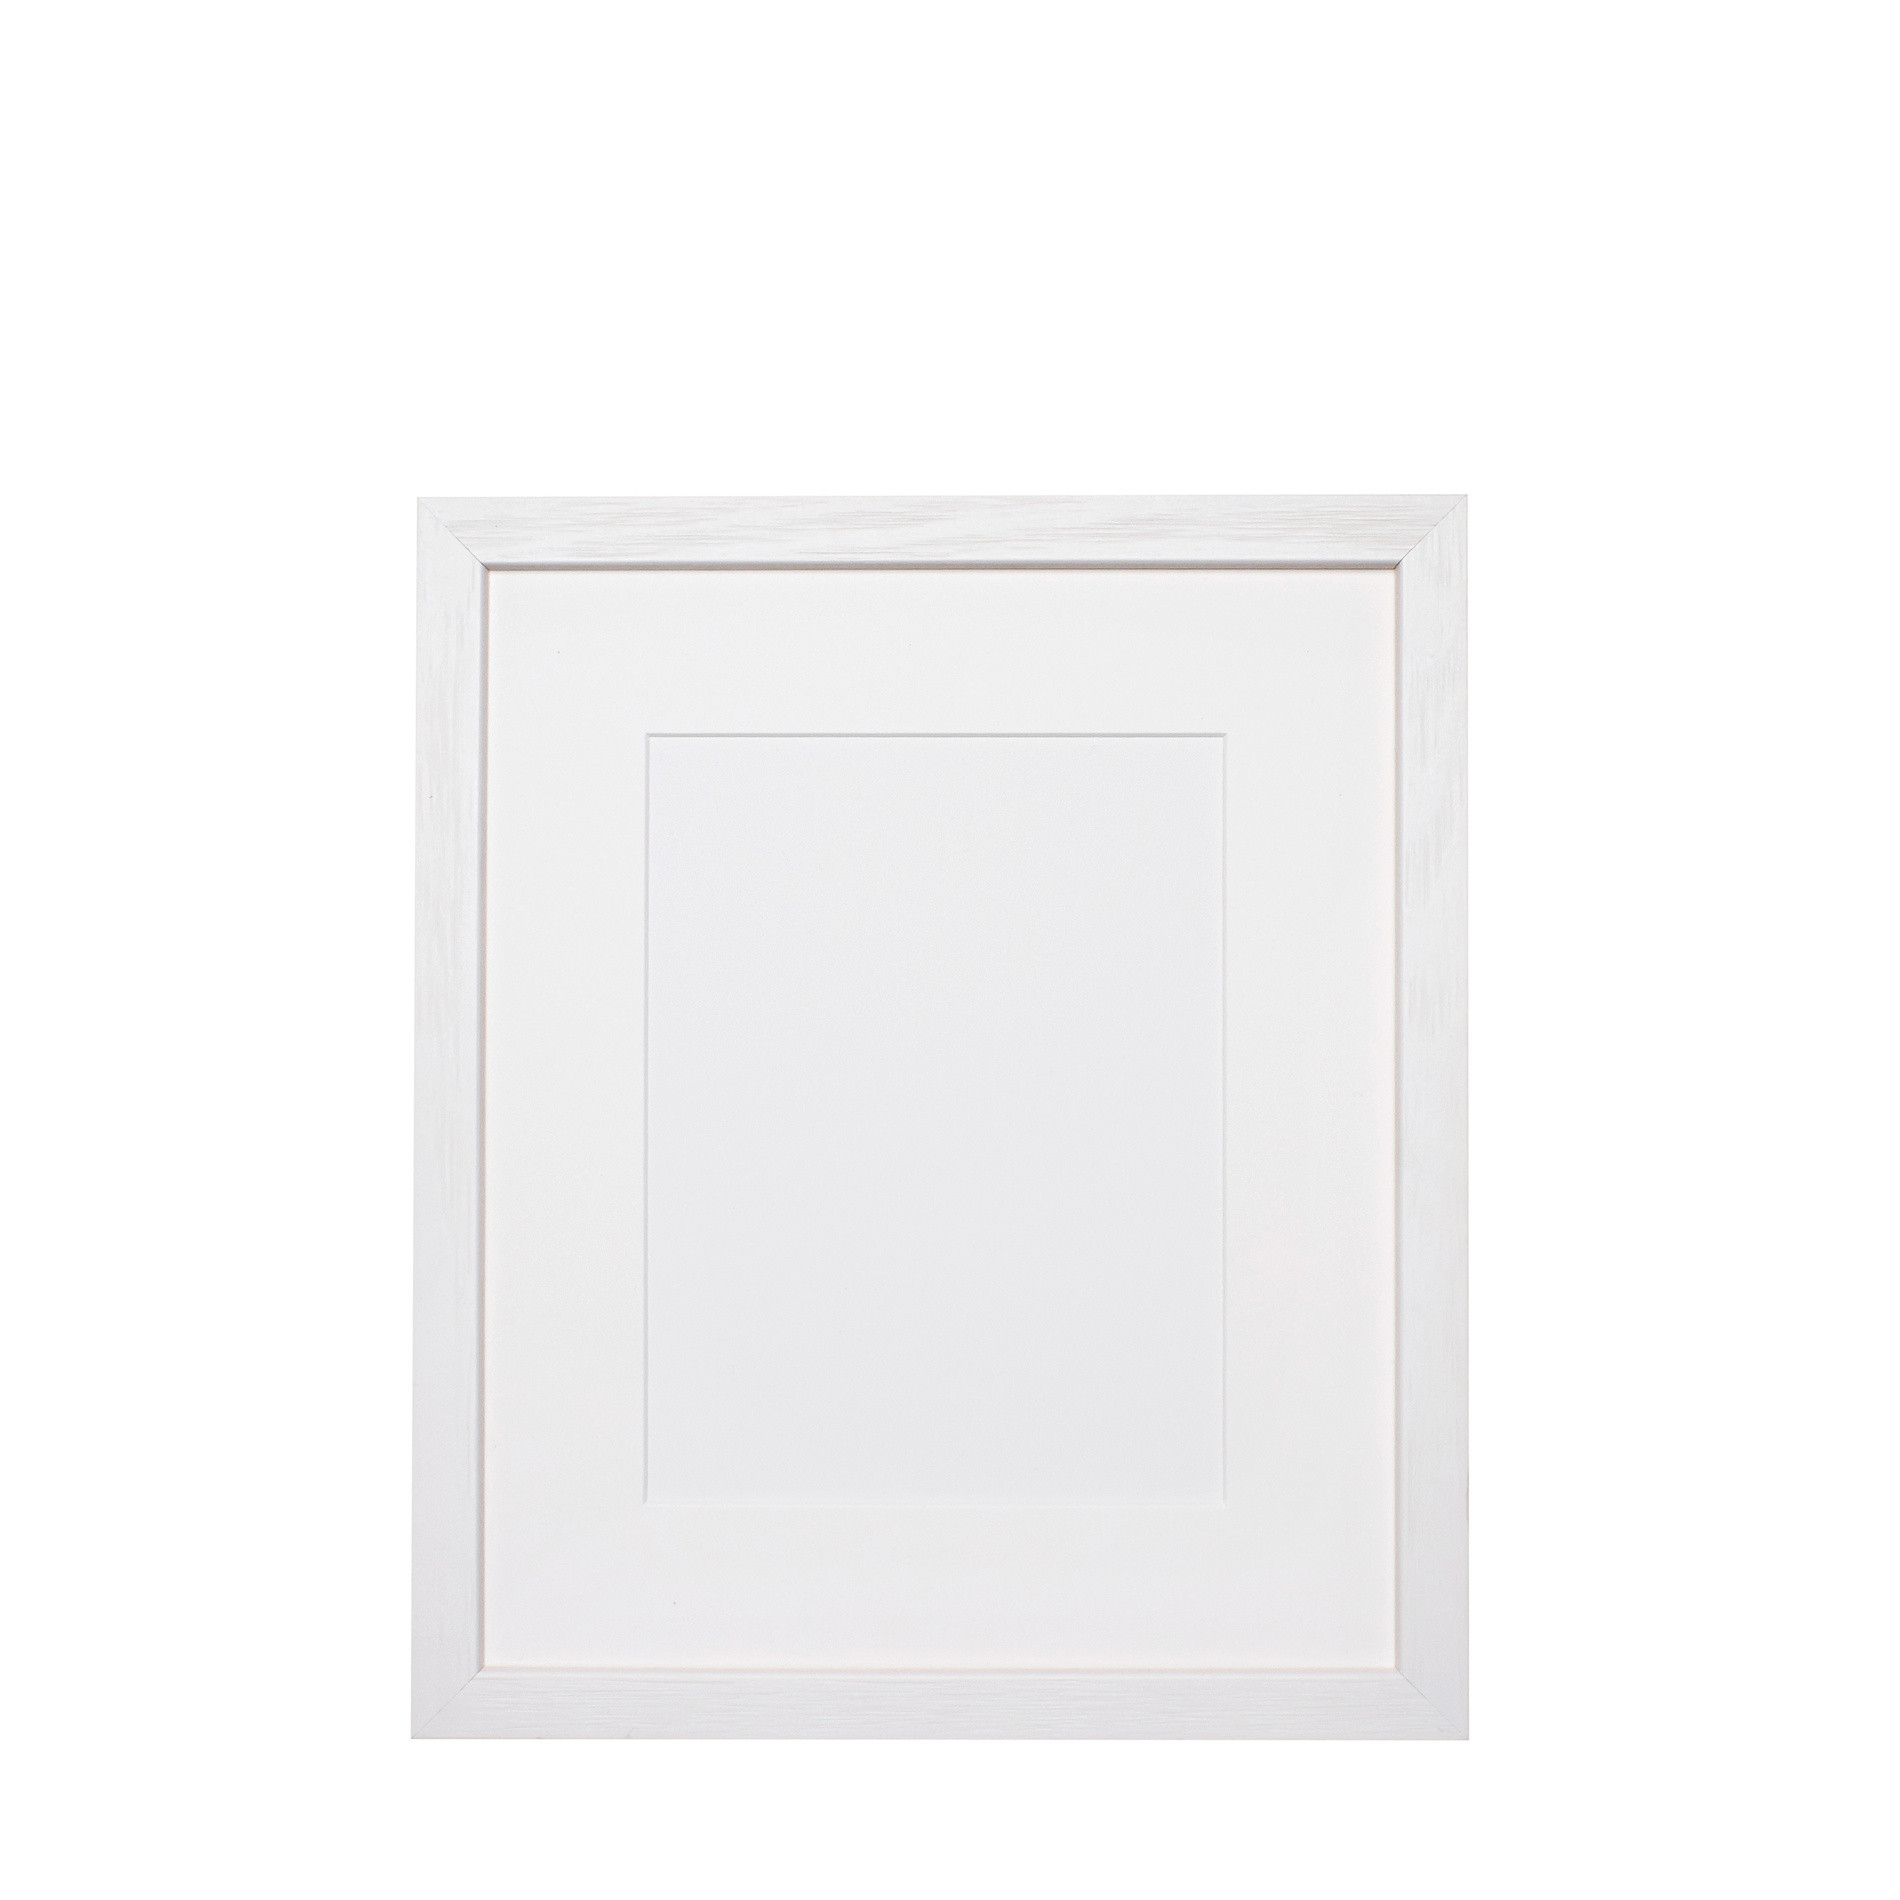 Portafoto legno bianco con passepartout, Bianco, large image number 0